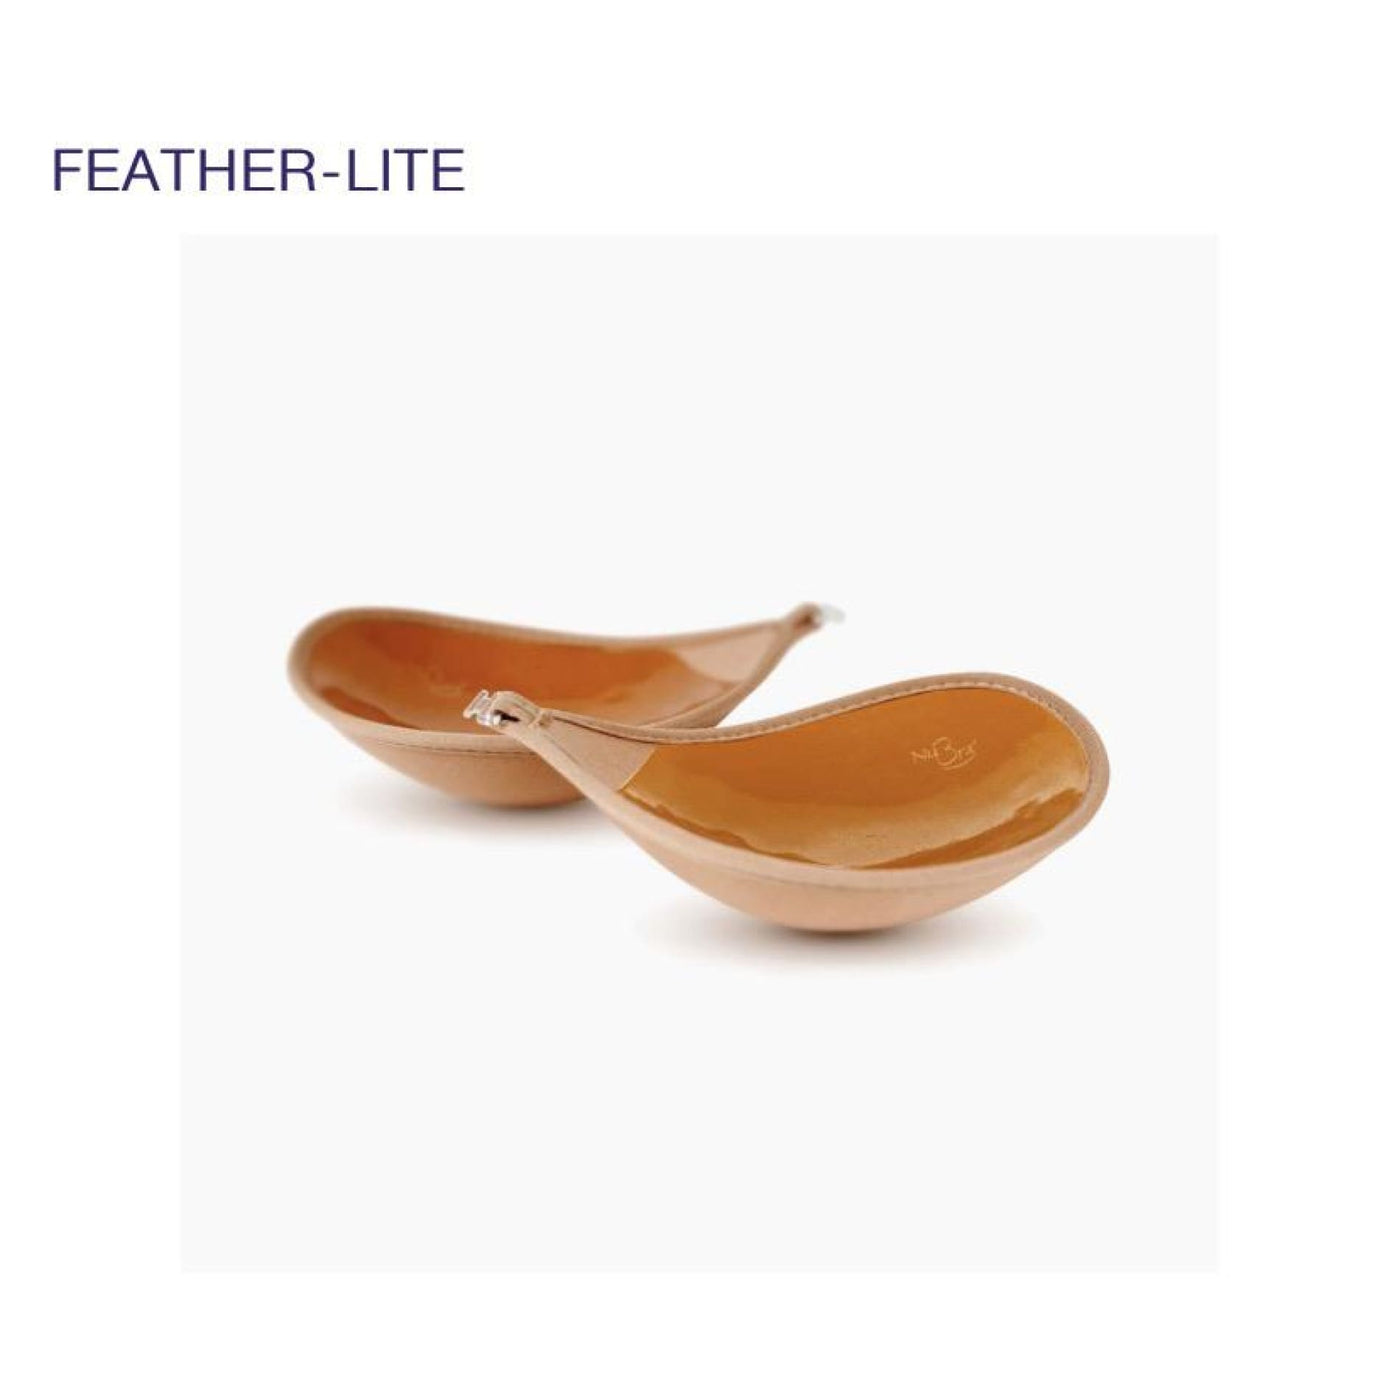 NuBra Featherlite - Accessories